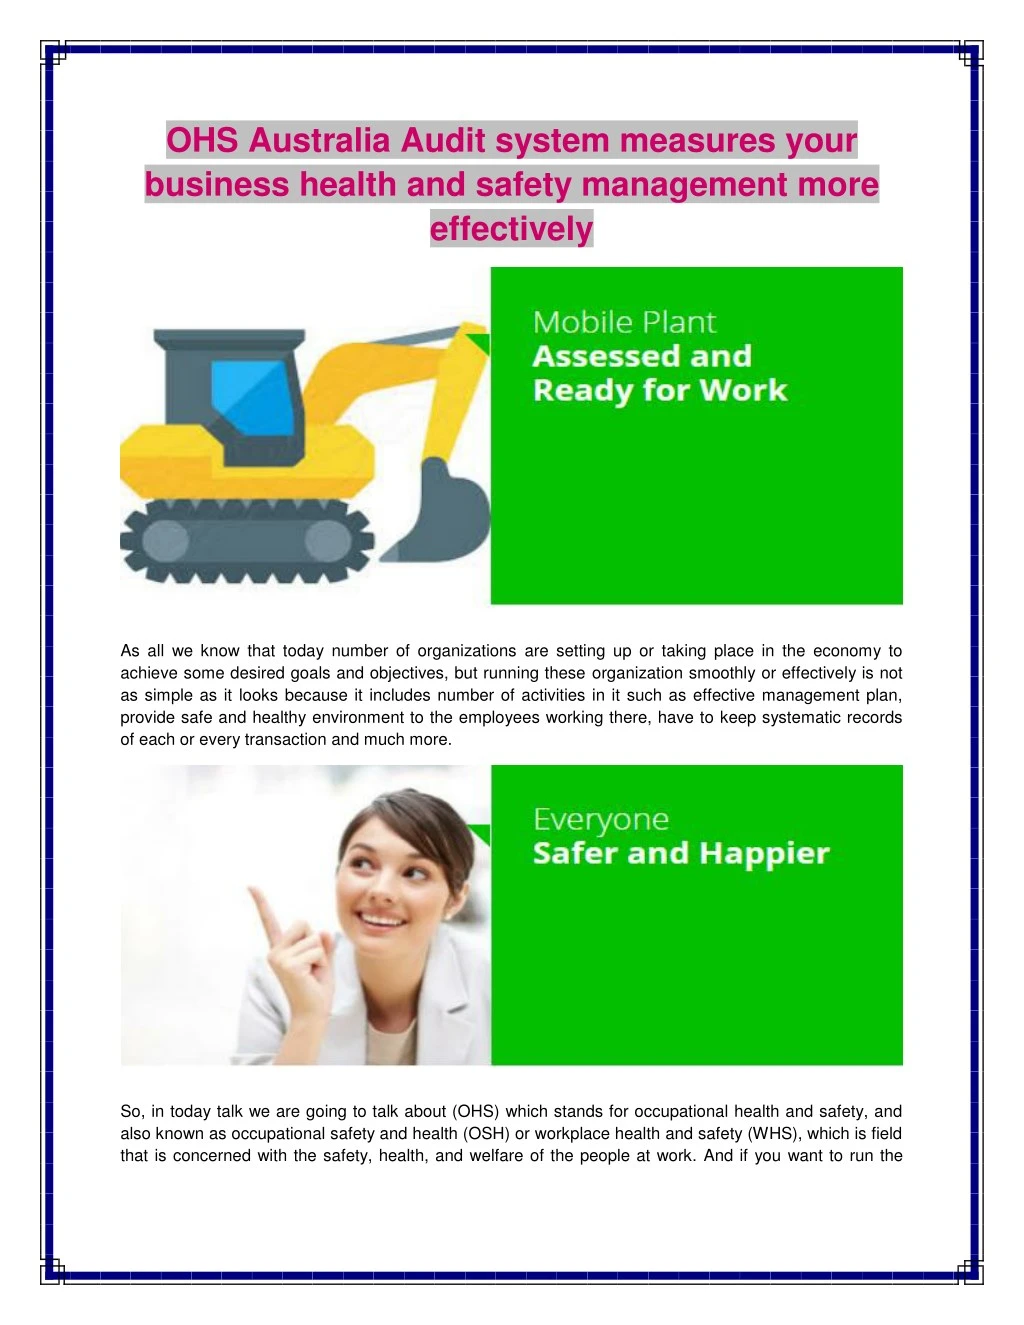 ohs australia audit system measures your business